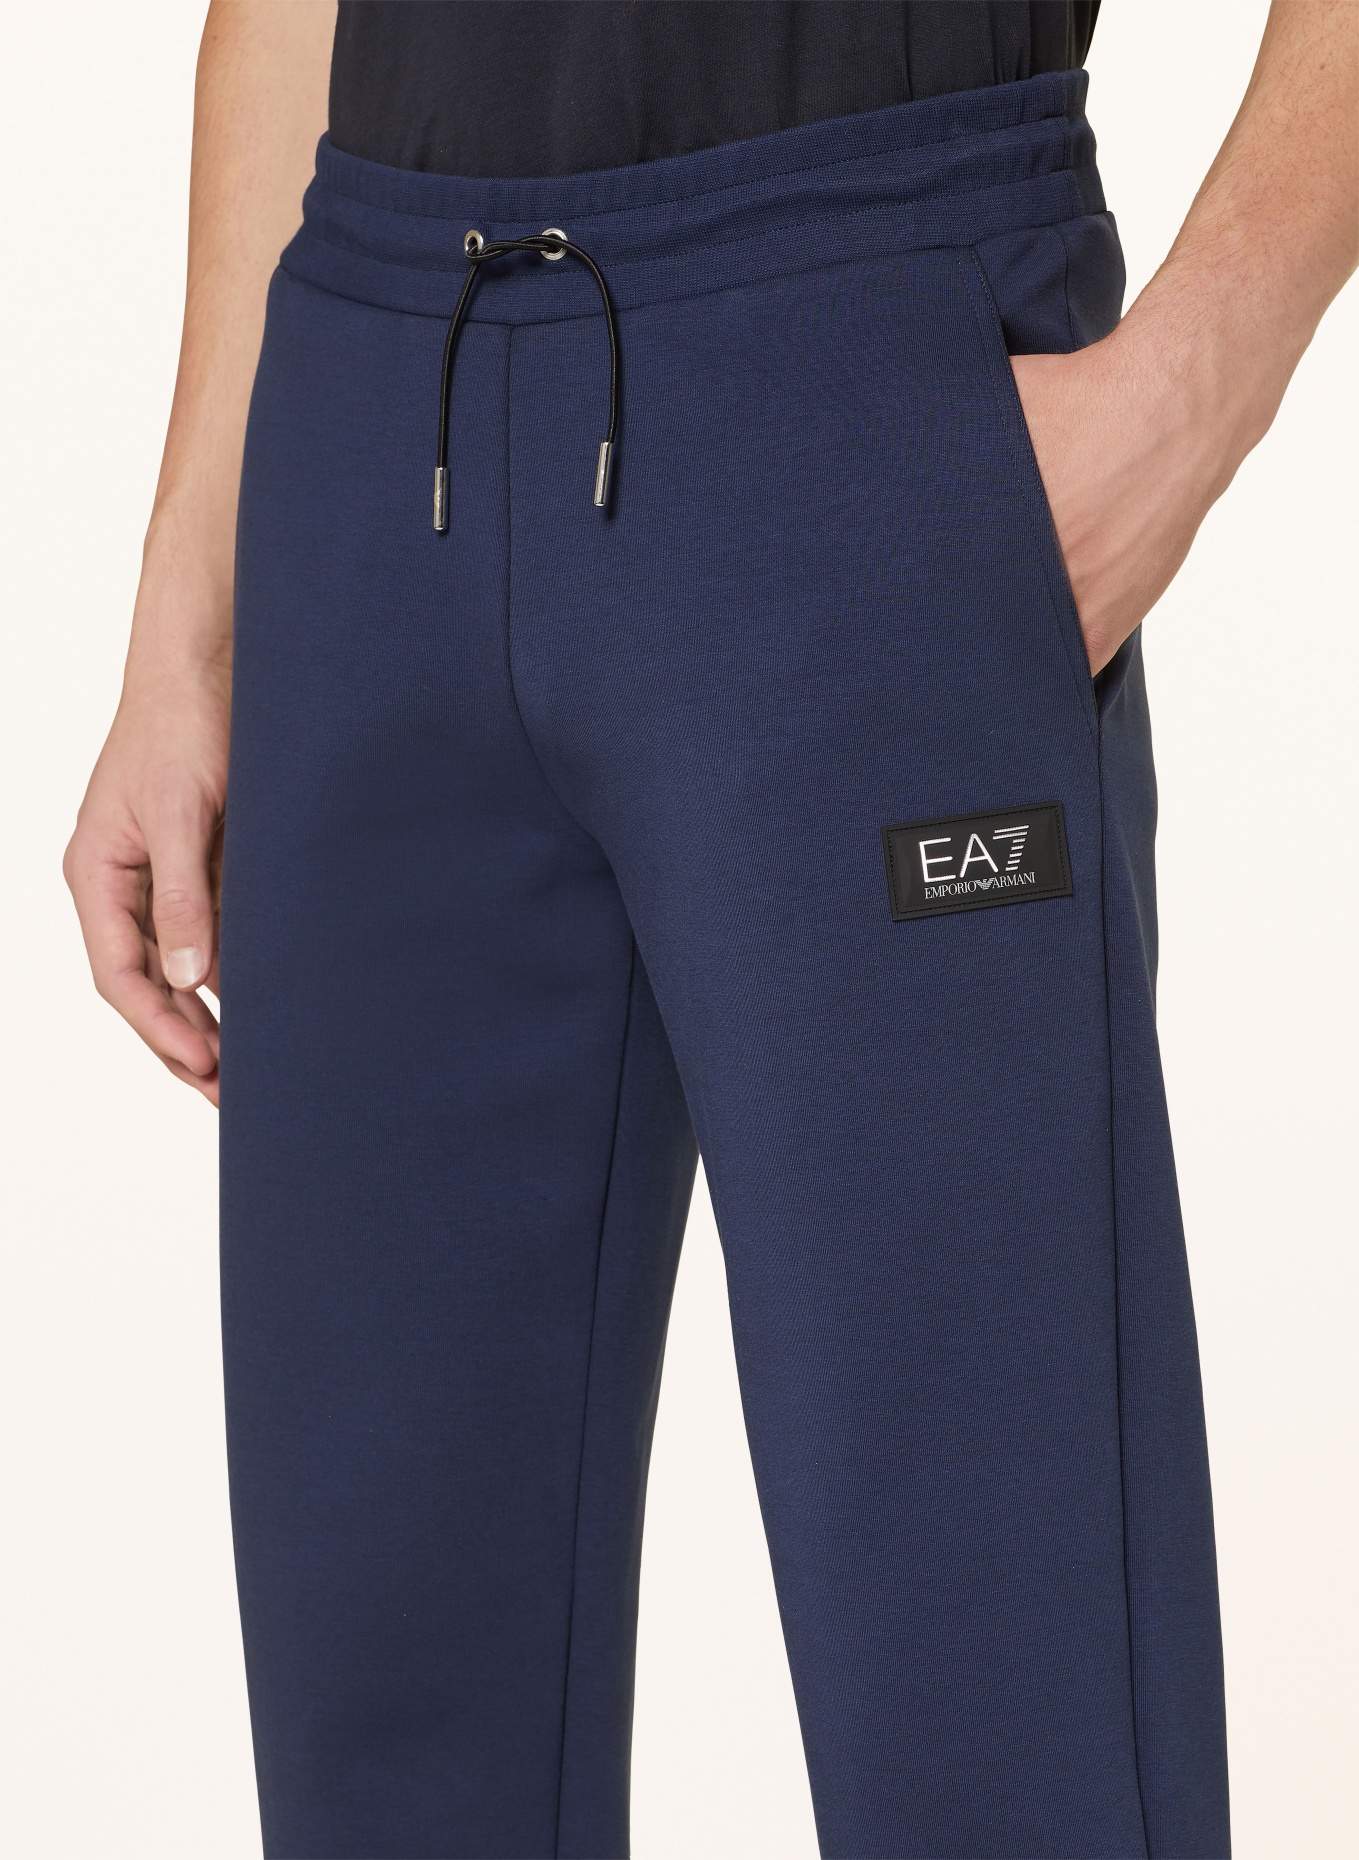 EA7 EMPORIO ARMANI Pants in jogger style, Color: DARK BLUE (Image 5)